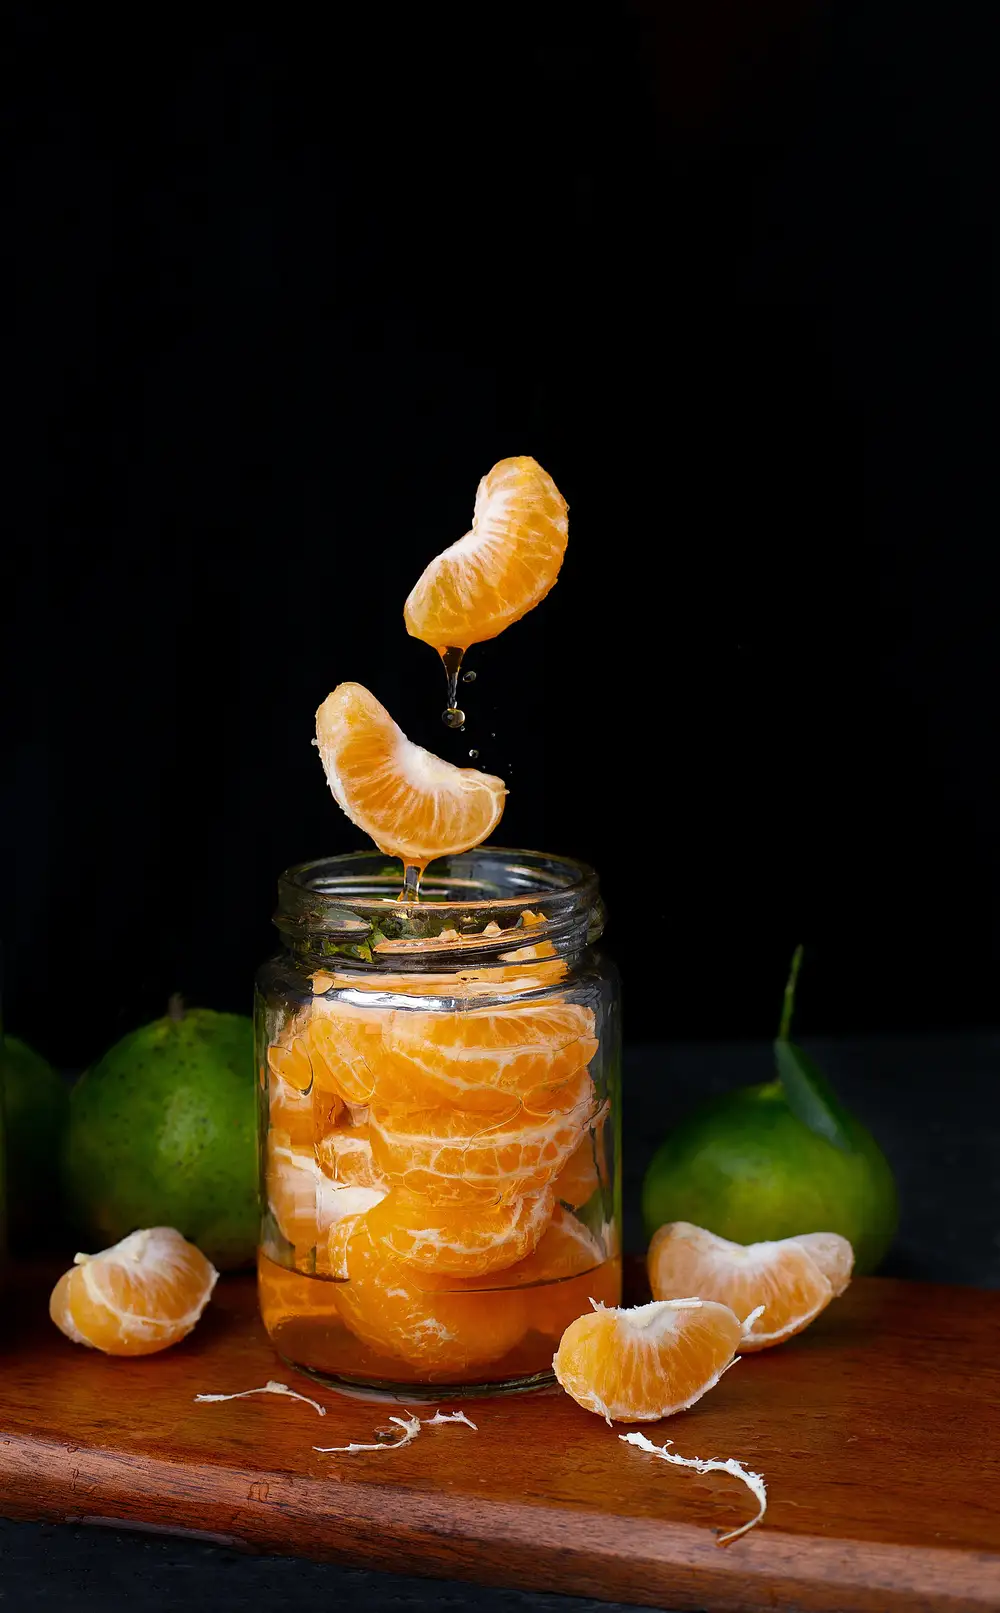 Tangerine in a jar